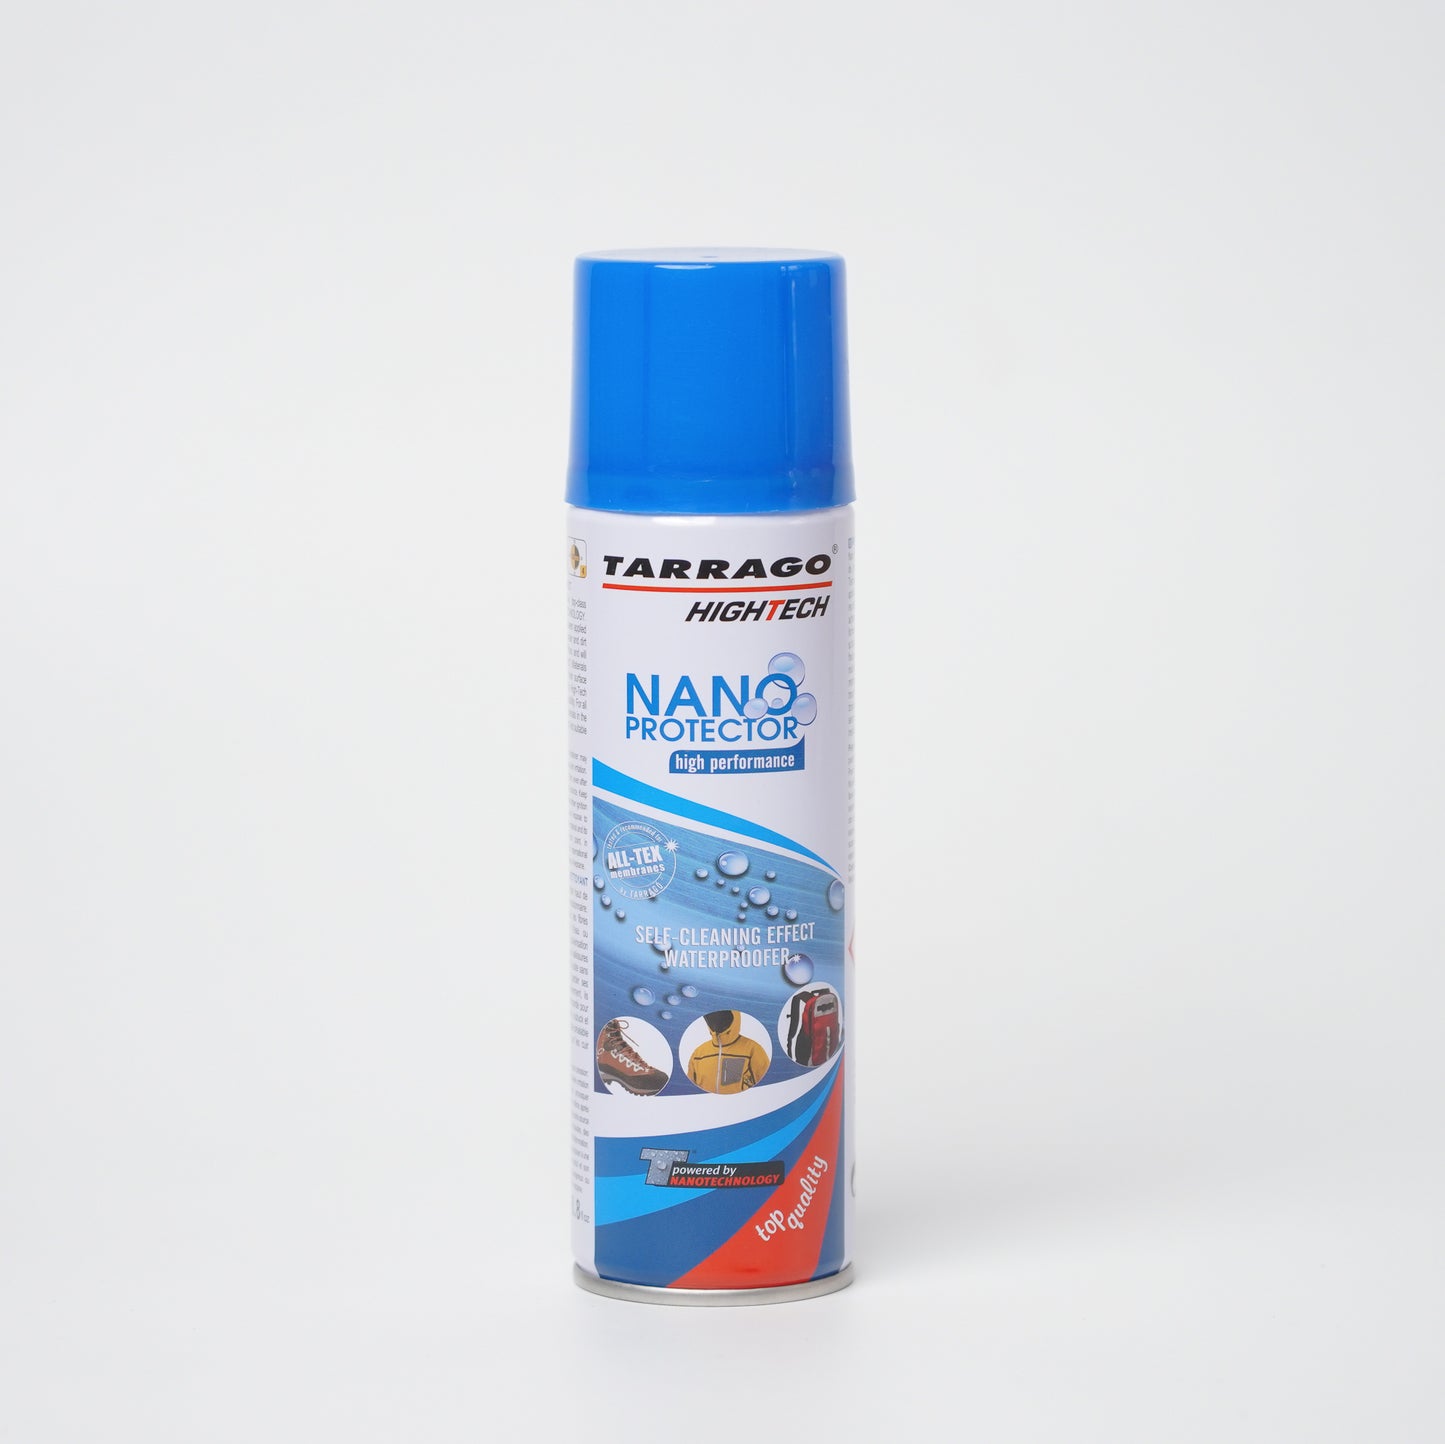 Tarrago Nano Protector Water Proof